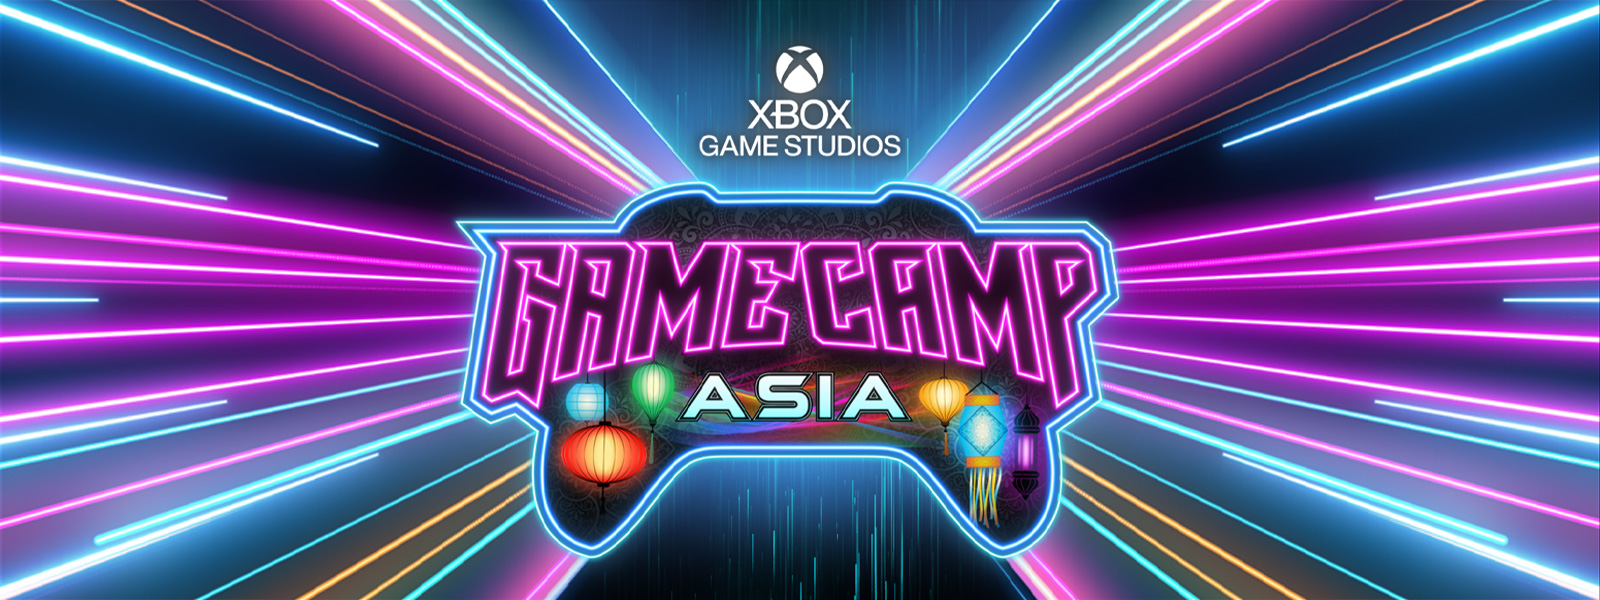 Xbox Game Studios Game Camp